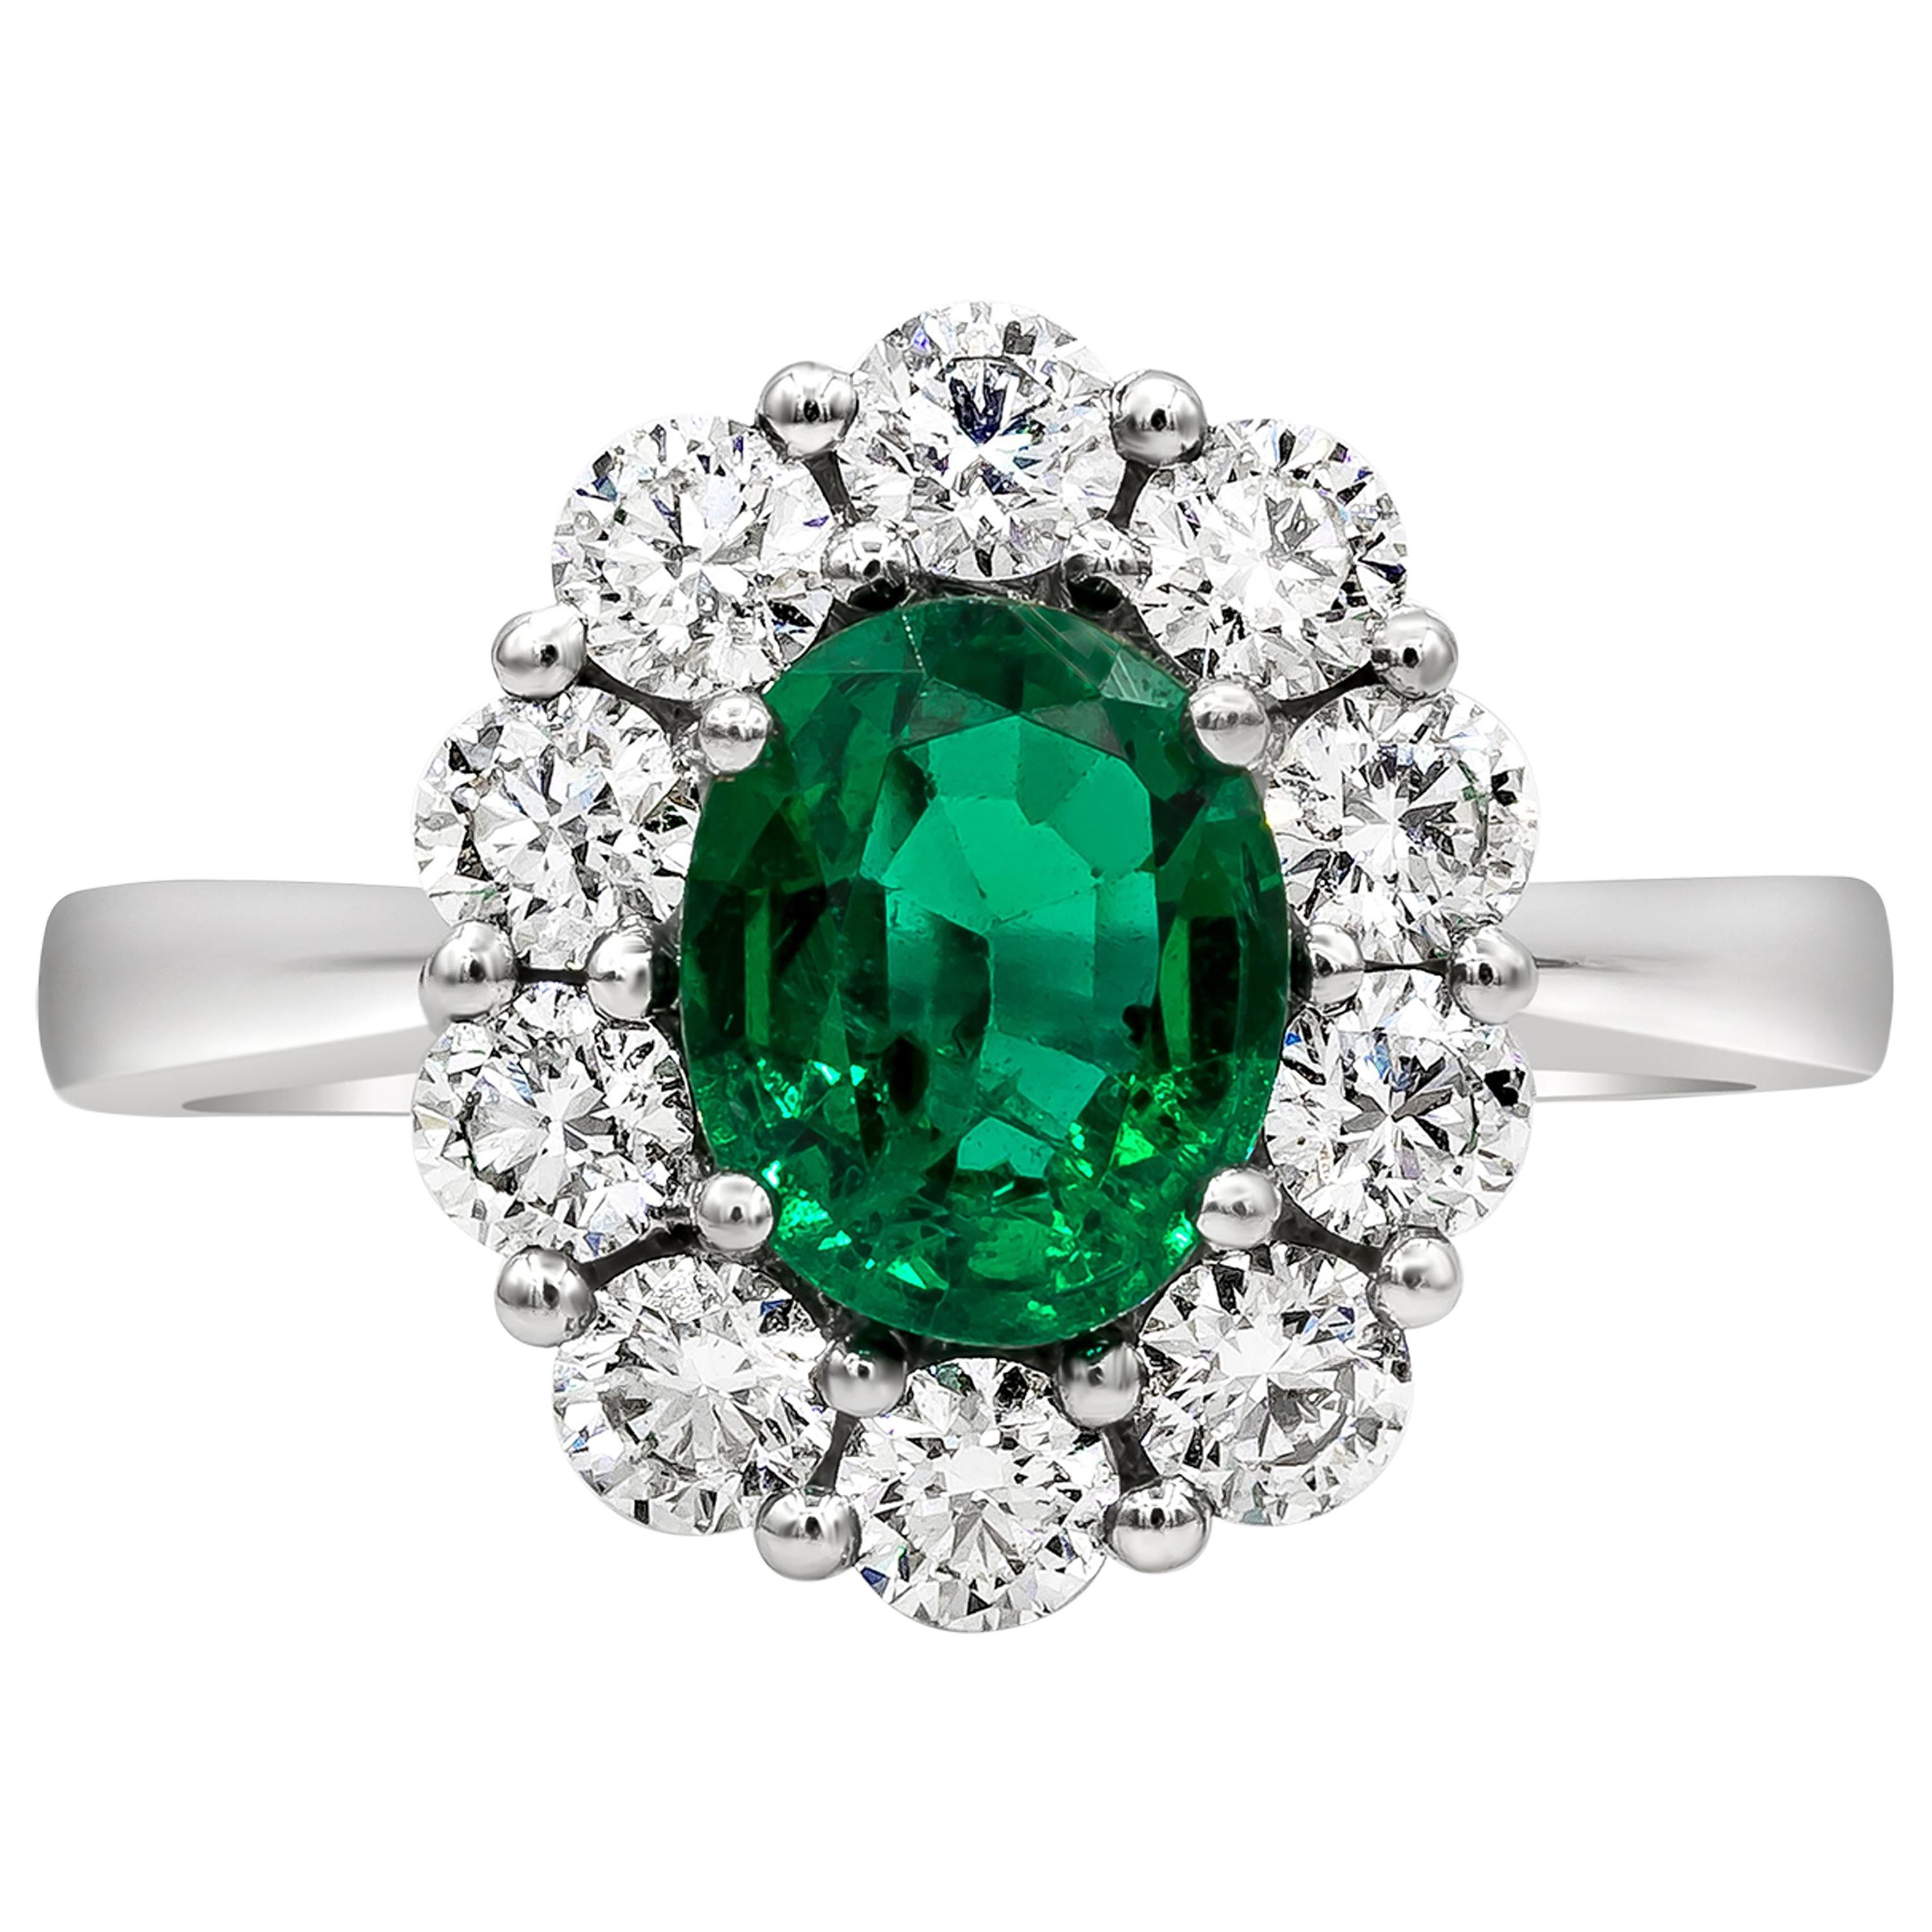 Roman Malakov 1.12 Carat Oval Cut Green Emerald and Diamond Halo Engagement Ring